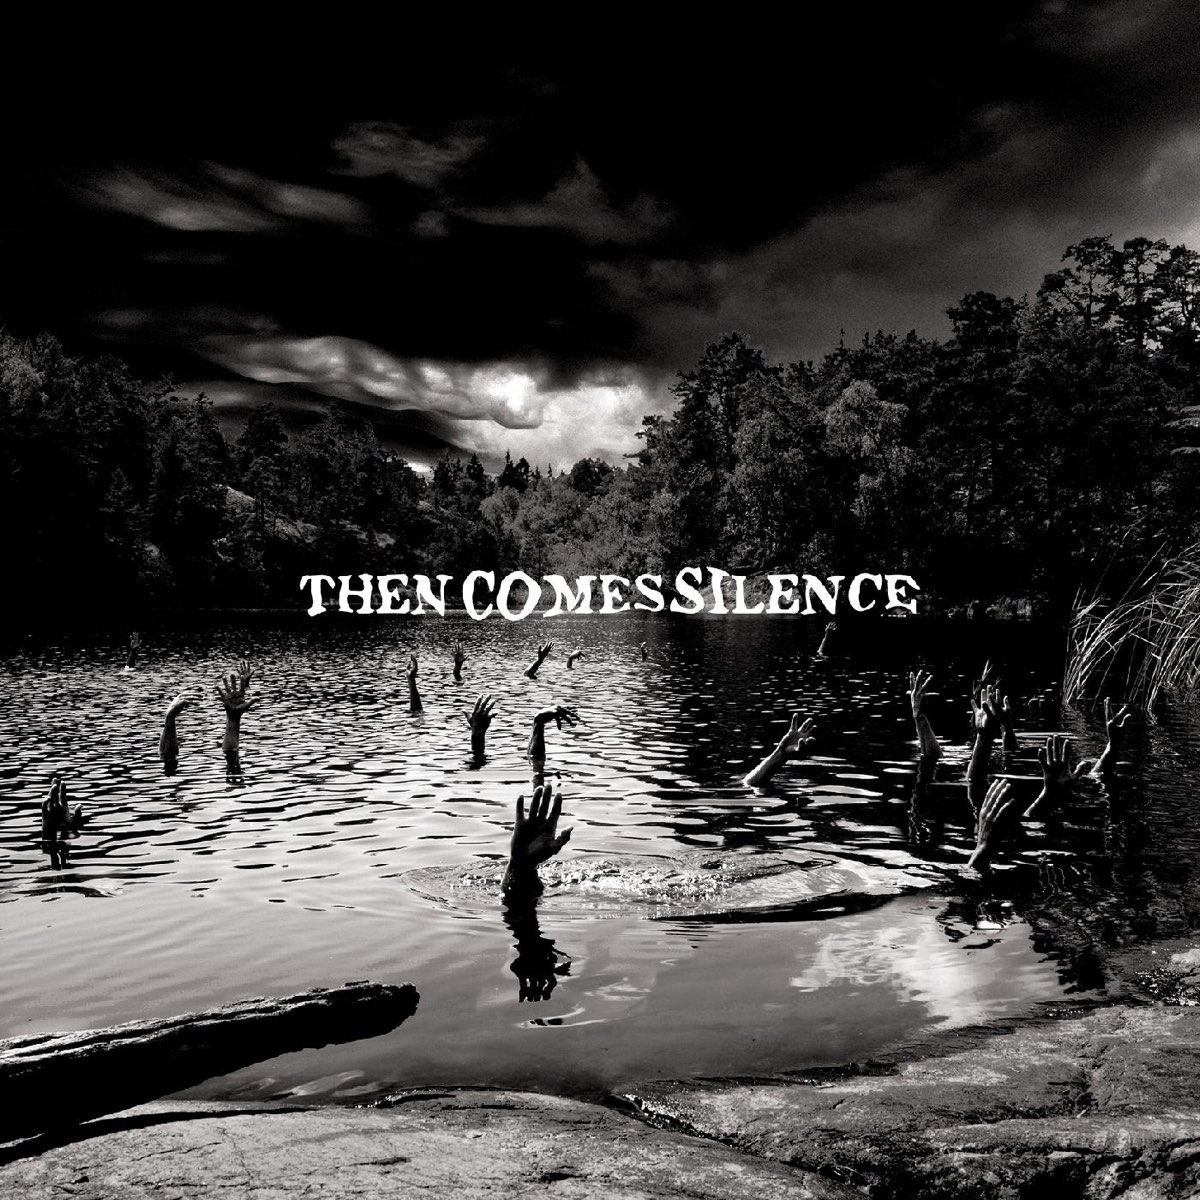 Then comes Silence. Then comes Silence группа. Then comes Silence обои. Silence песня. Молчание песня слушать